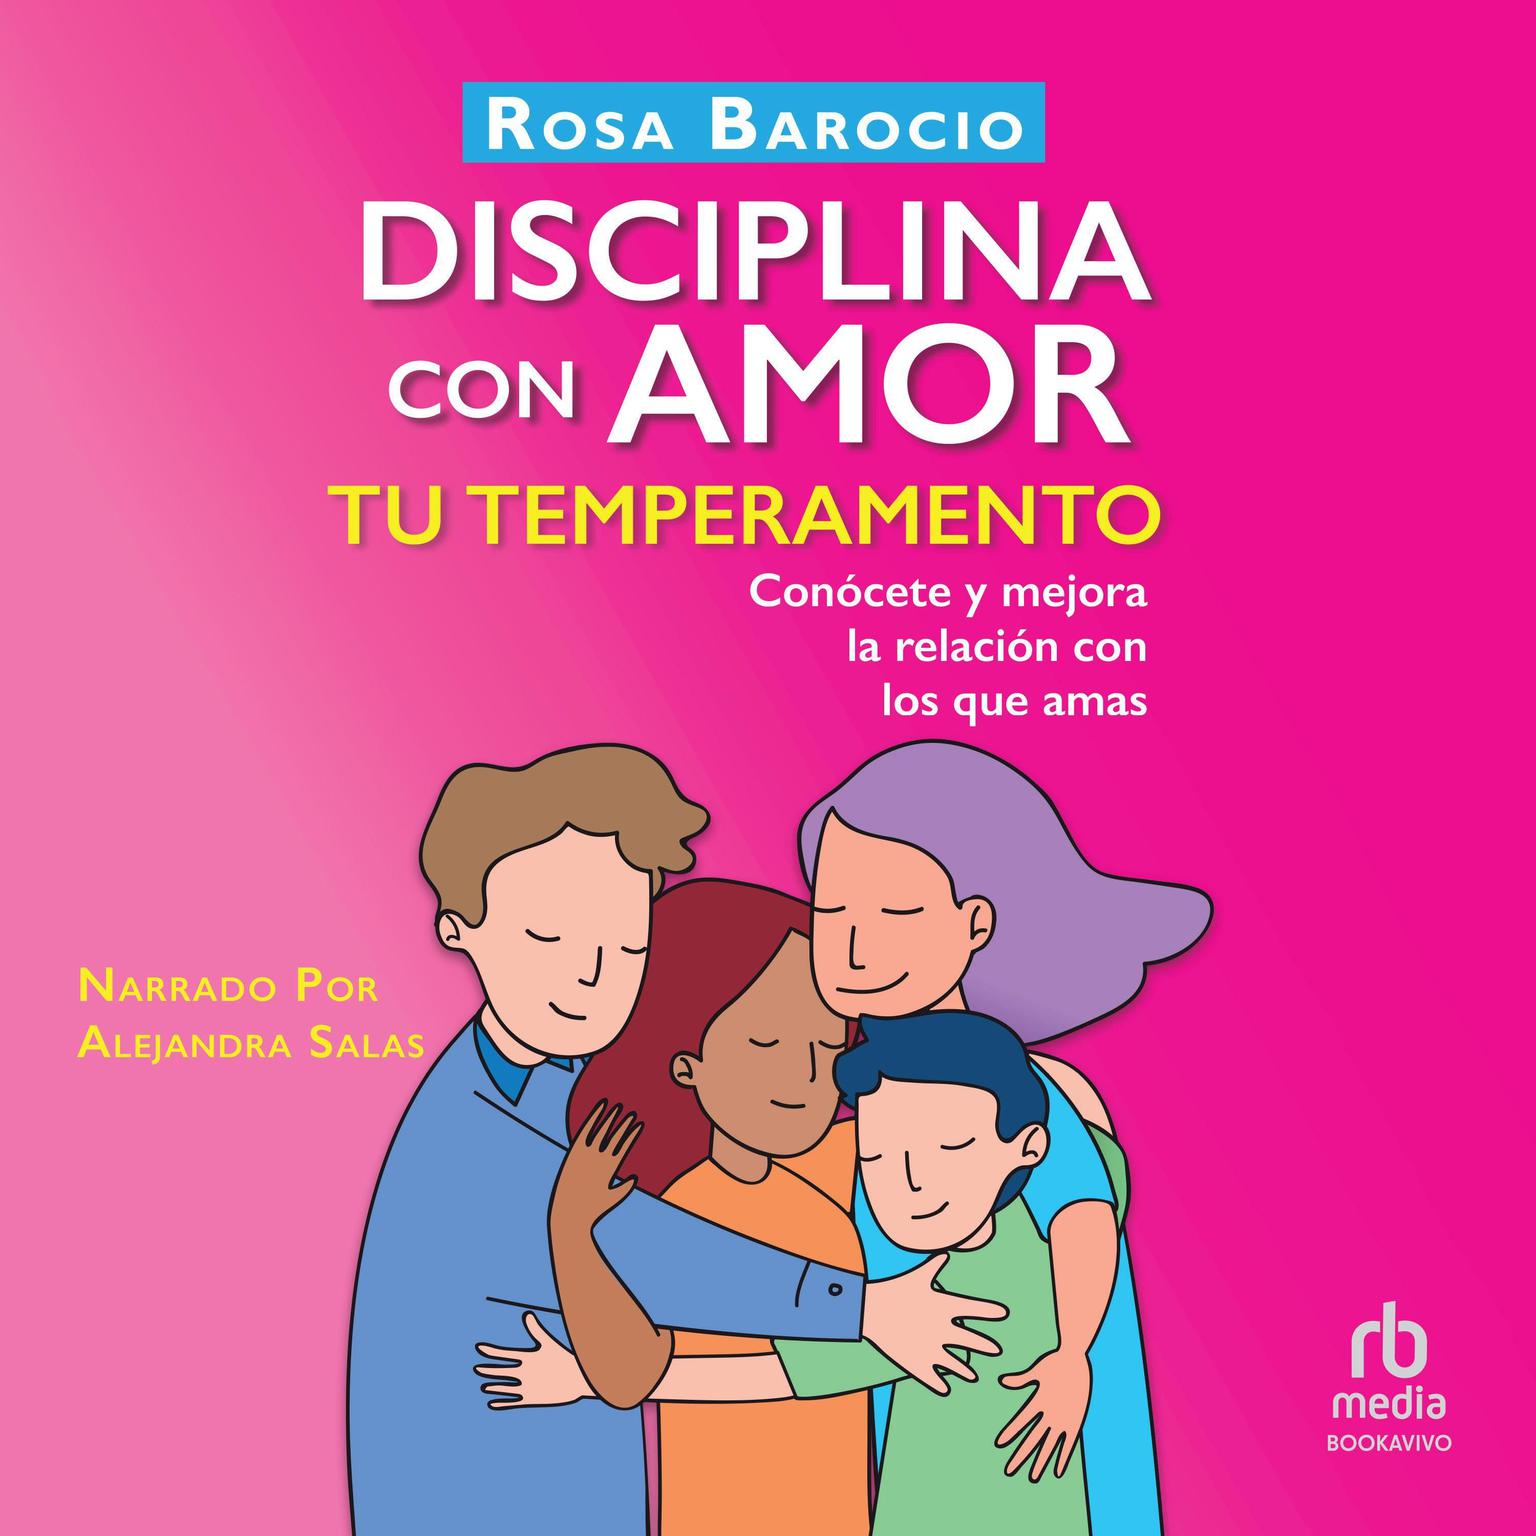 Disciplina con amor tu temperamento Audiobook, by Rosa Barocio